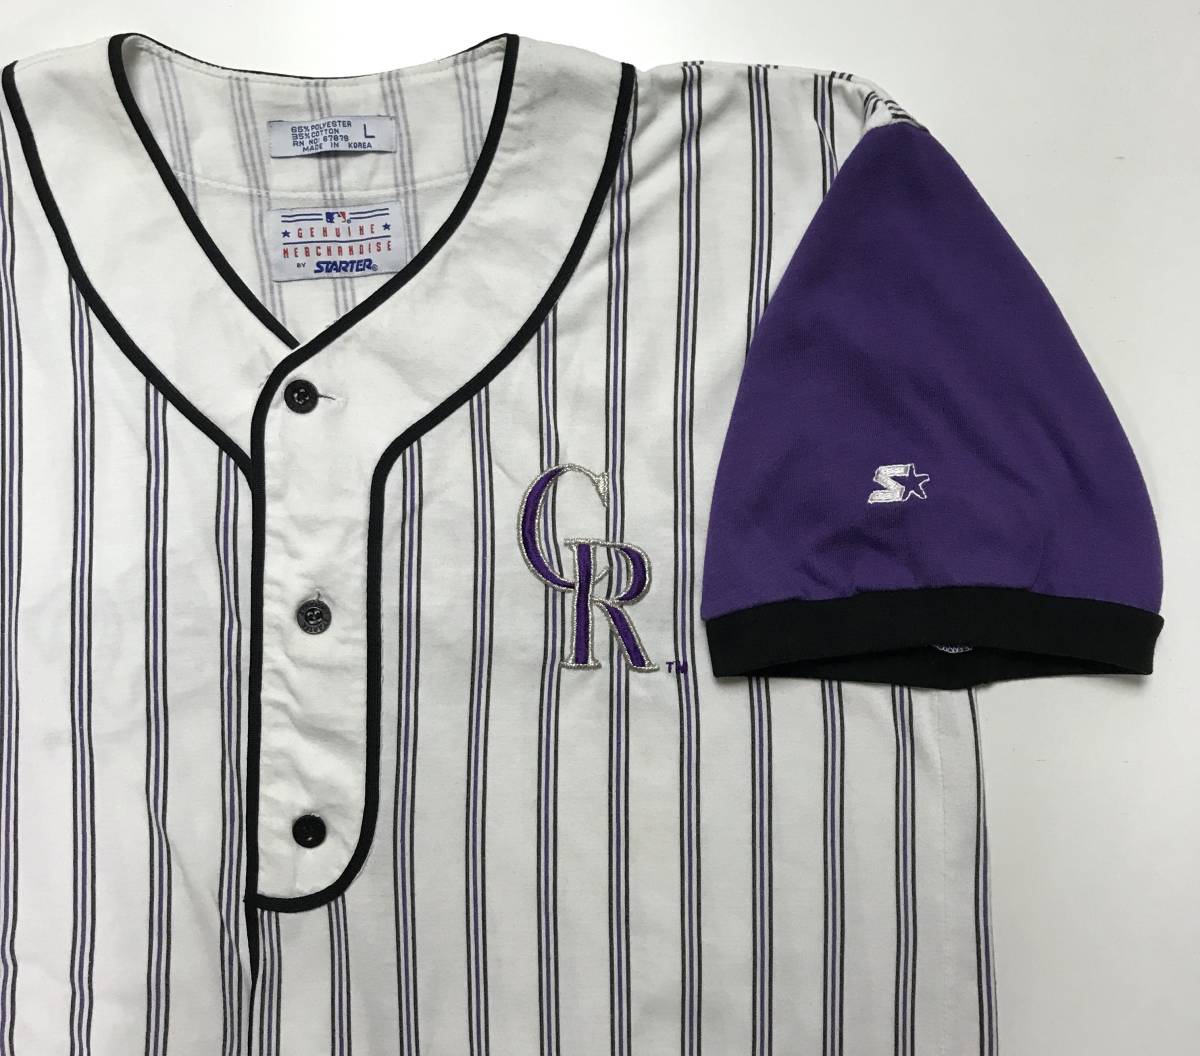 STRTER コロラド ロッキーズ MLB ベースボールシャツ L ユニフォーム 90s ビンテージ スターター_画像8